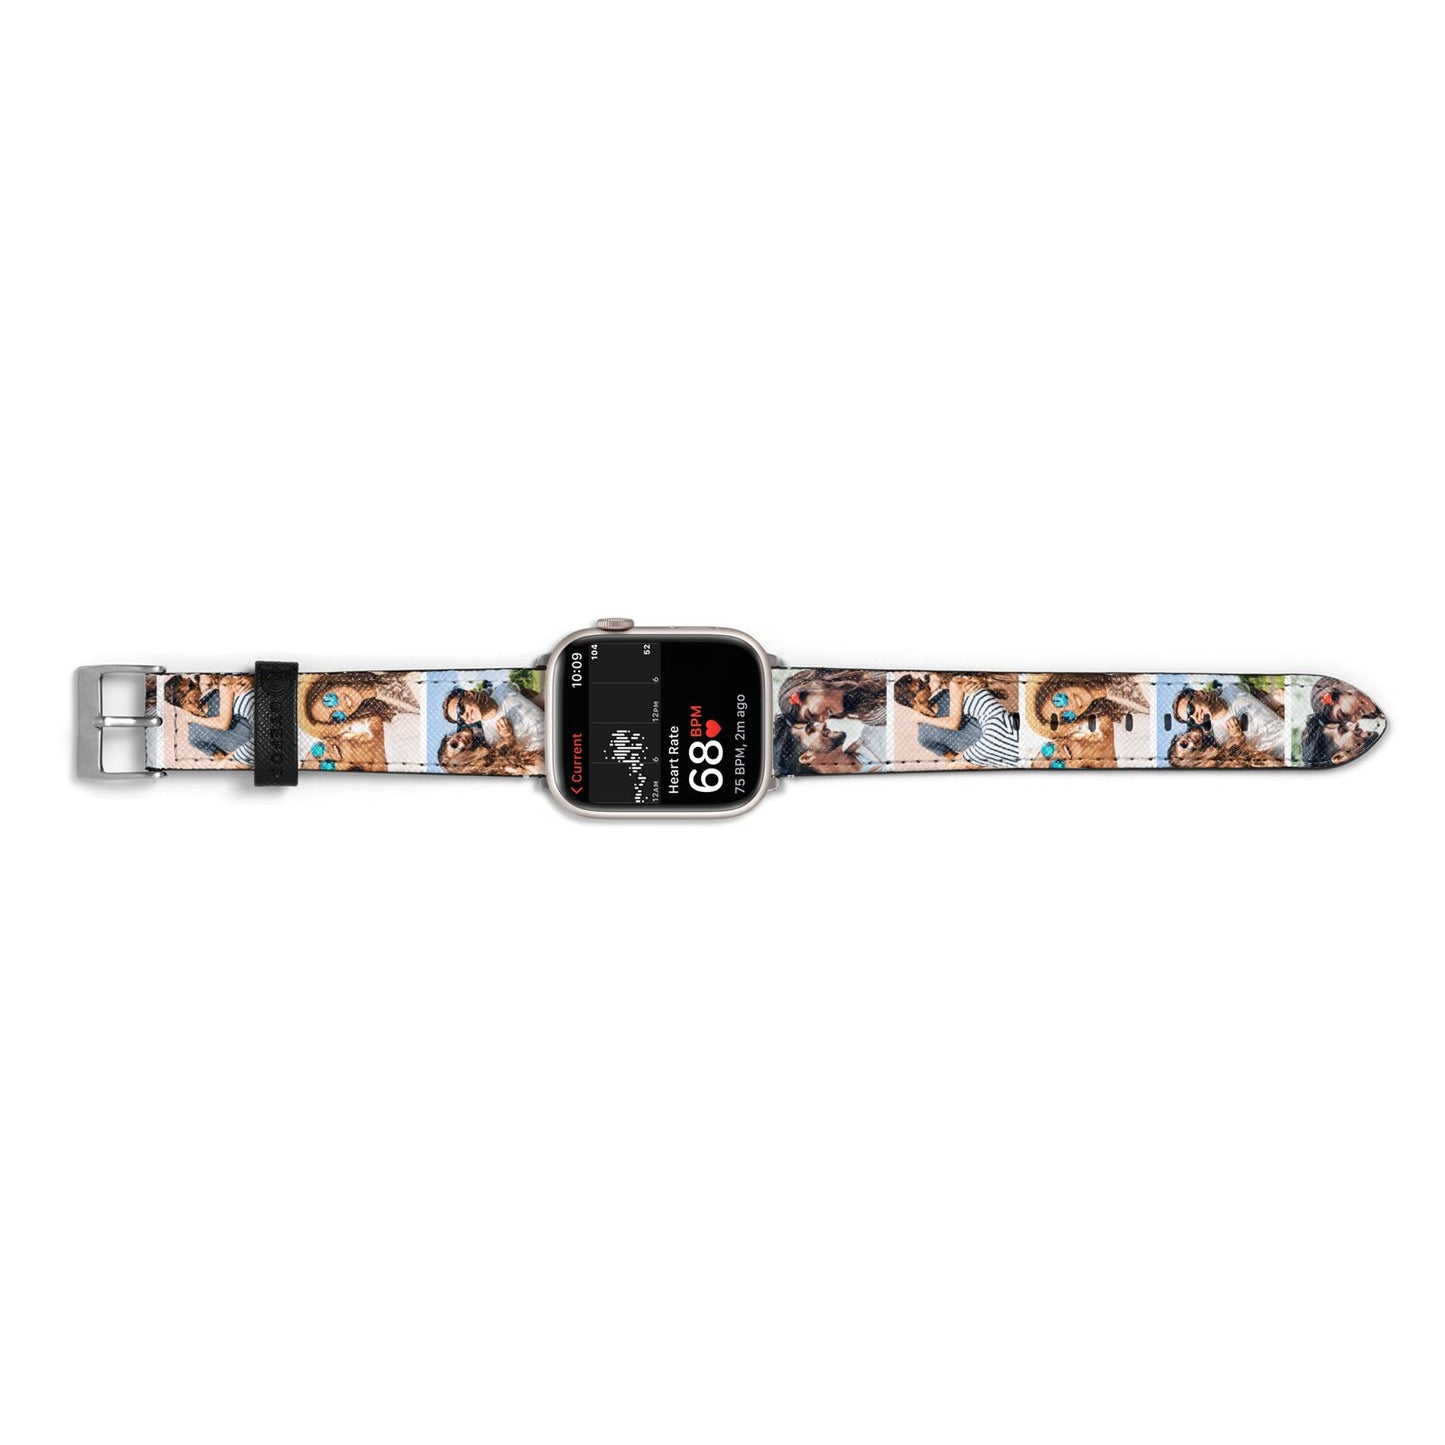 Photo Strip Montage Upload Apple Watch Strap Size 38mm Landscape Image Silver Hardware